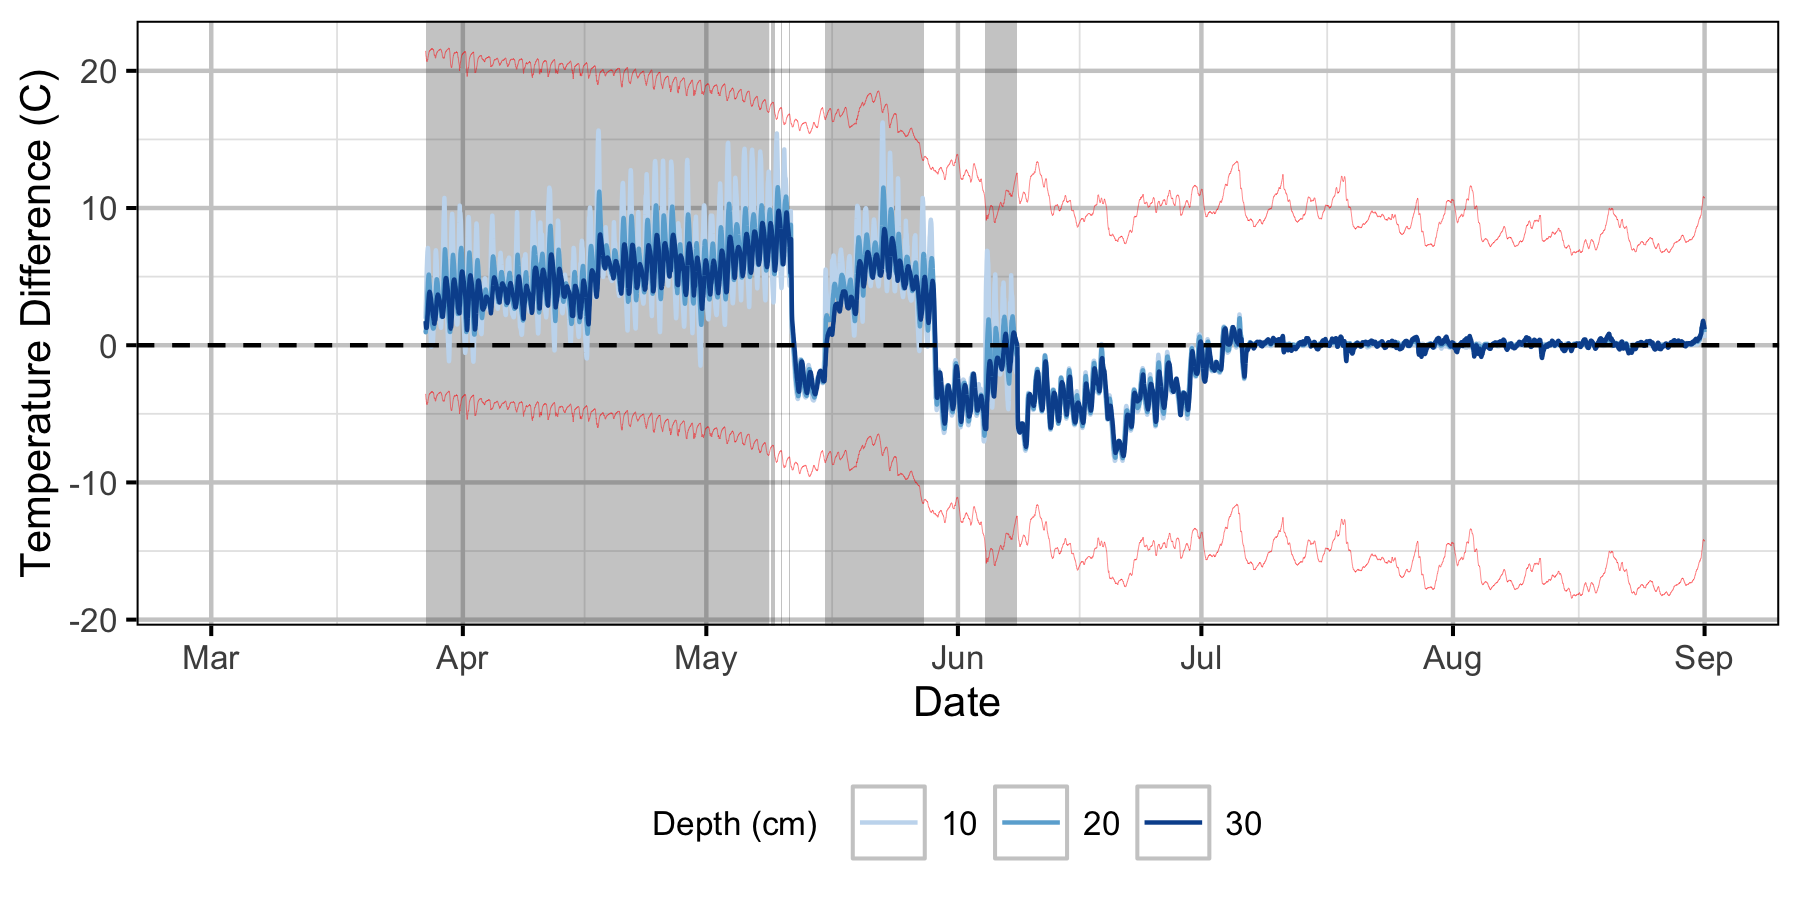 figures/Sensor Data/Relative Gravel Temperature Stations/Norns Creek Fan/Station03.png